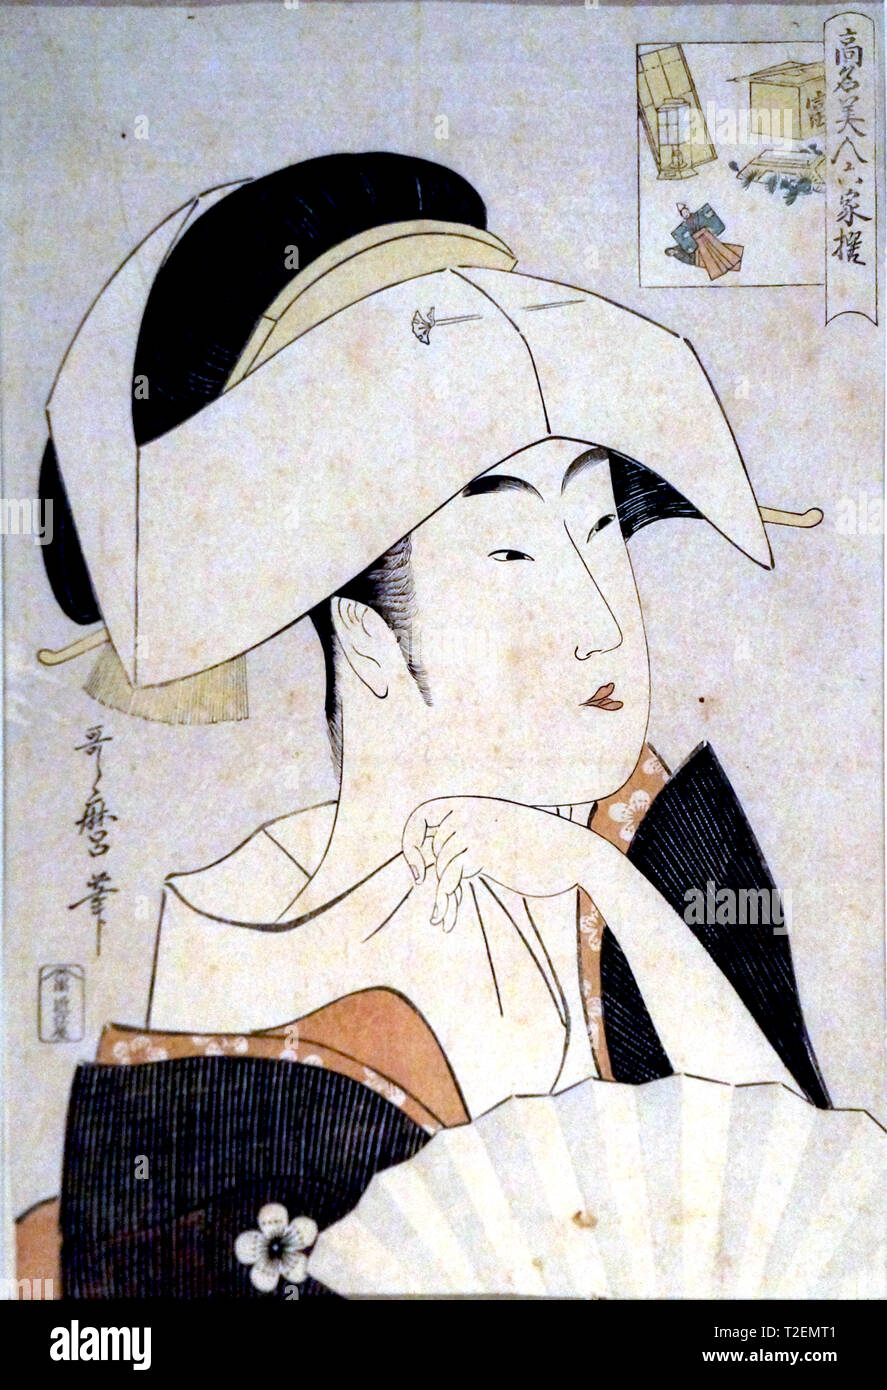 Rinomate bellezze paragonato a sei poeti immortale: Tomimoto Toyohina, da Kitagawa Utamaro, woodblock stampa, Periodo Edo Foto Stock